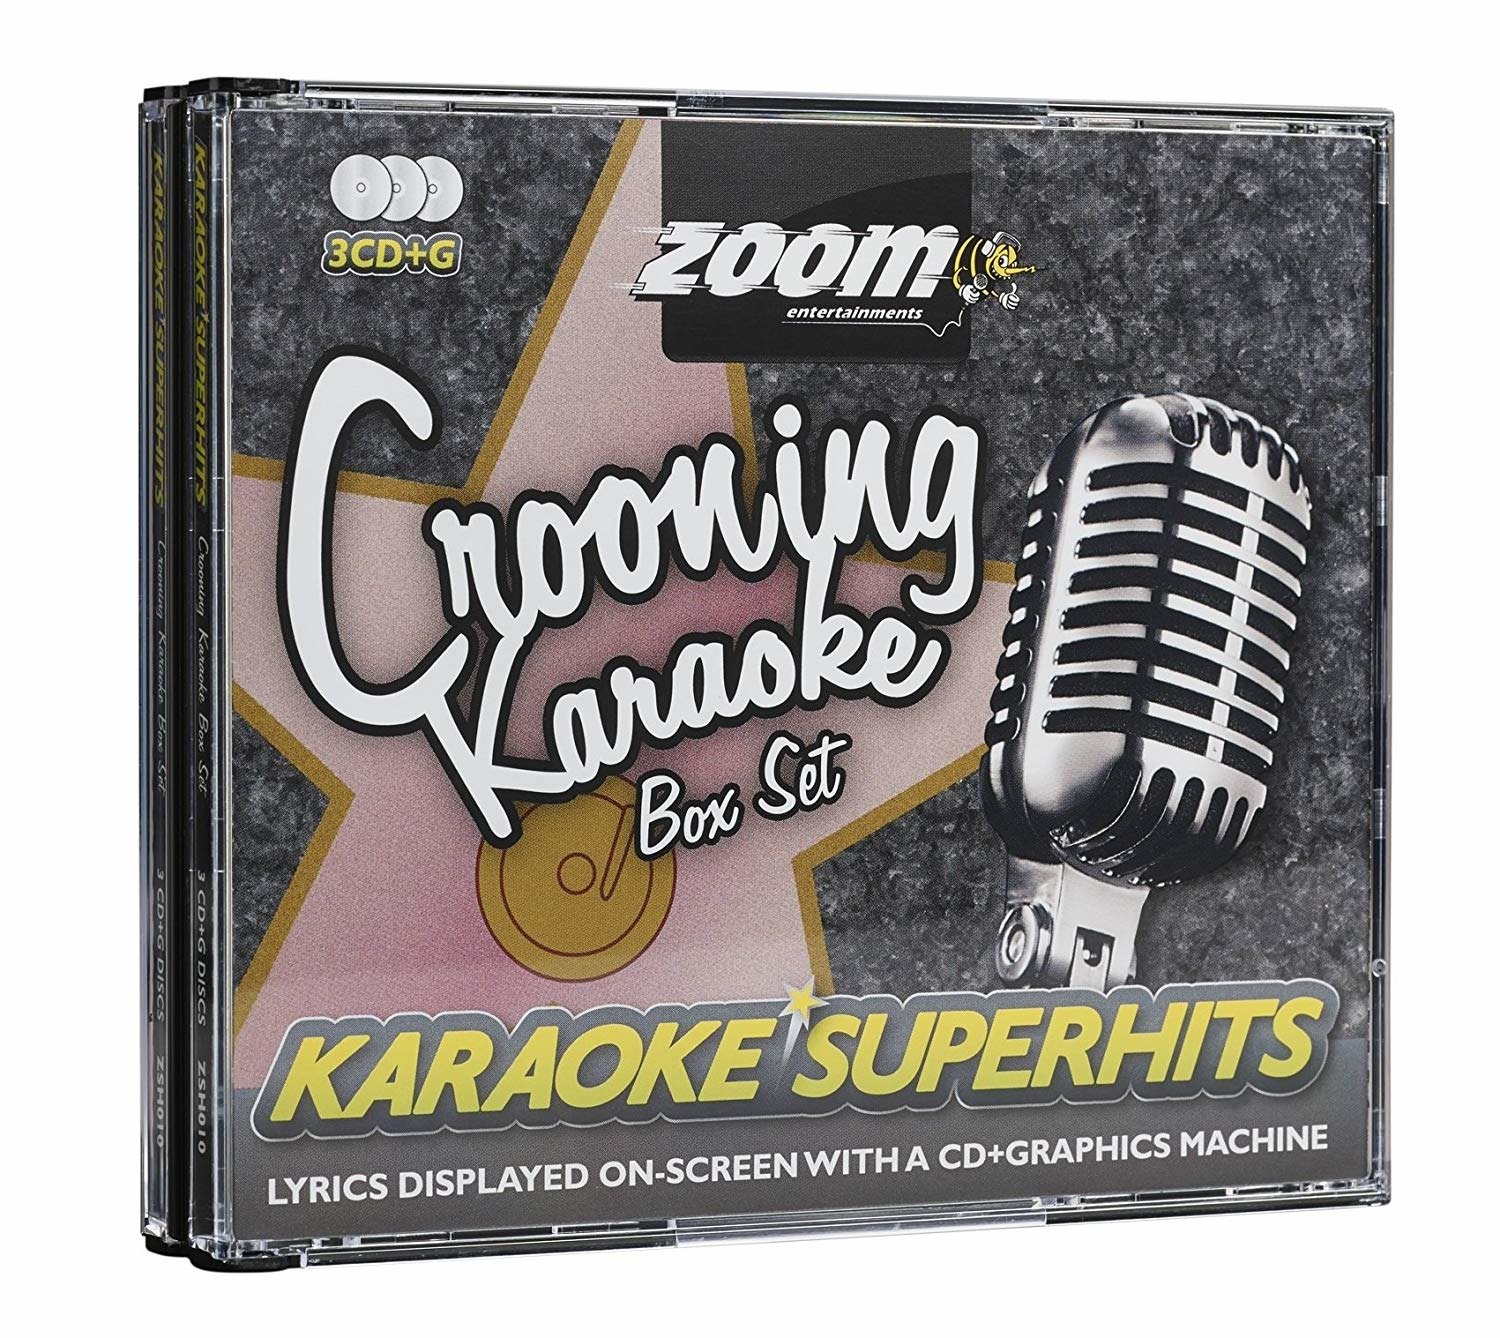 CD Shop - ZOOM KARAOKE KARAOKE SUPERHITS: CROONING KARAOKE BOX SET